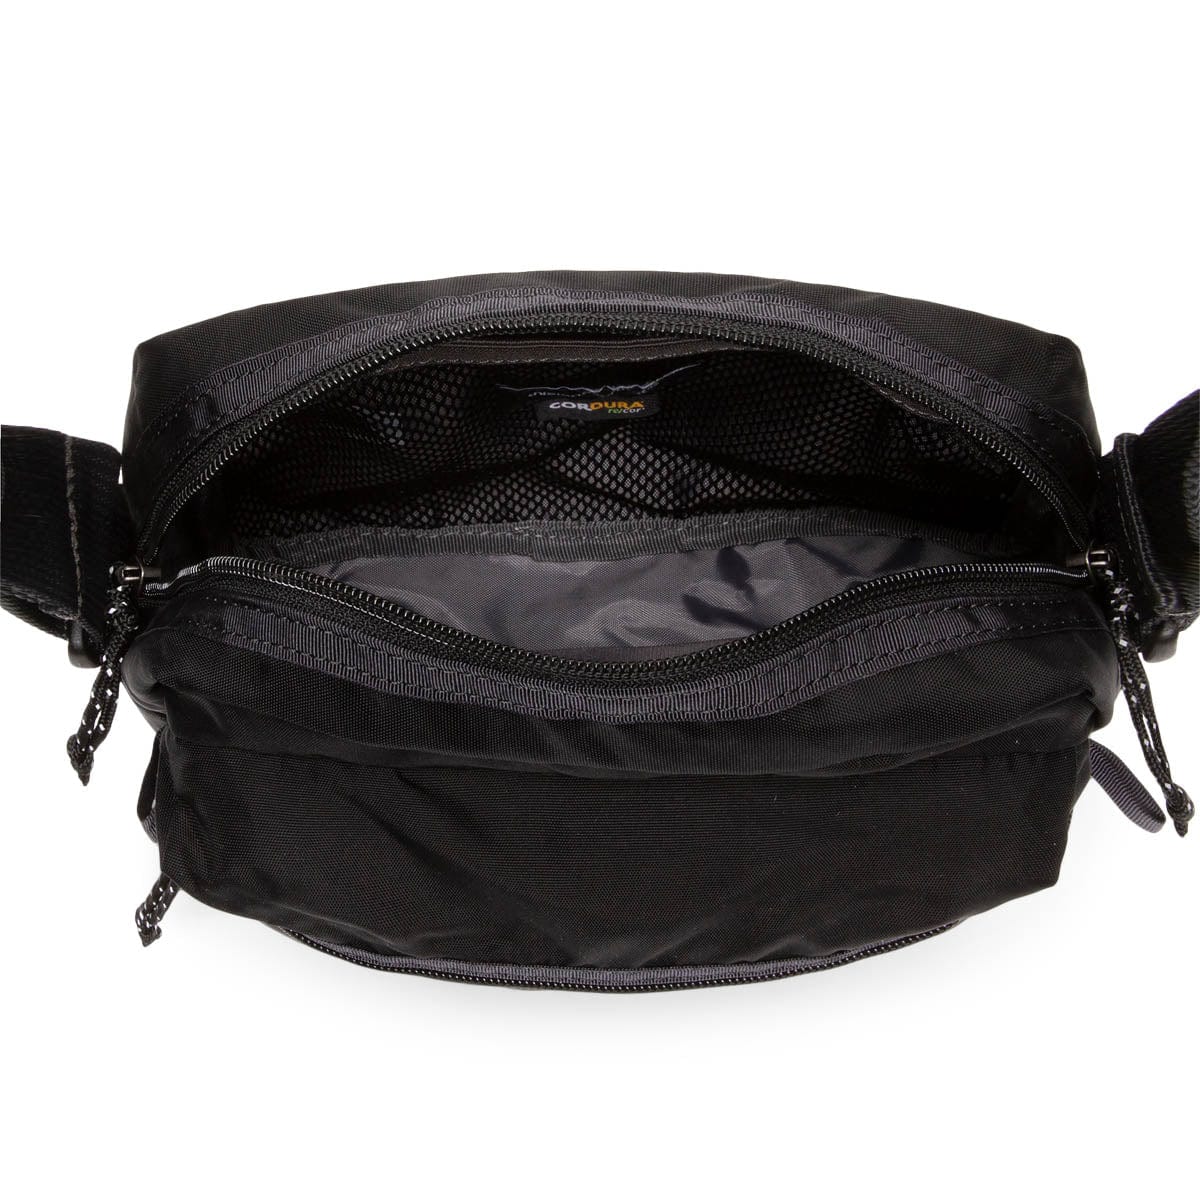 Leicht Shoulder Bag Navy / Os